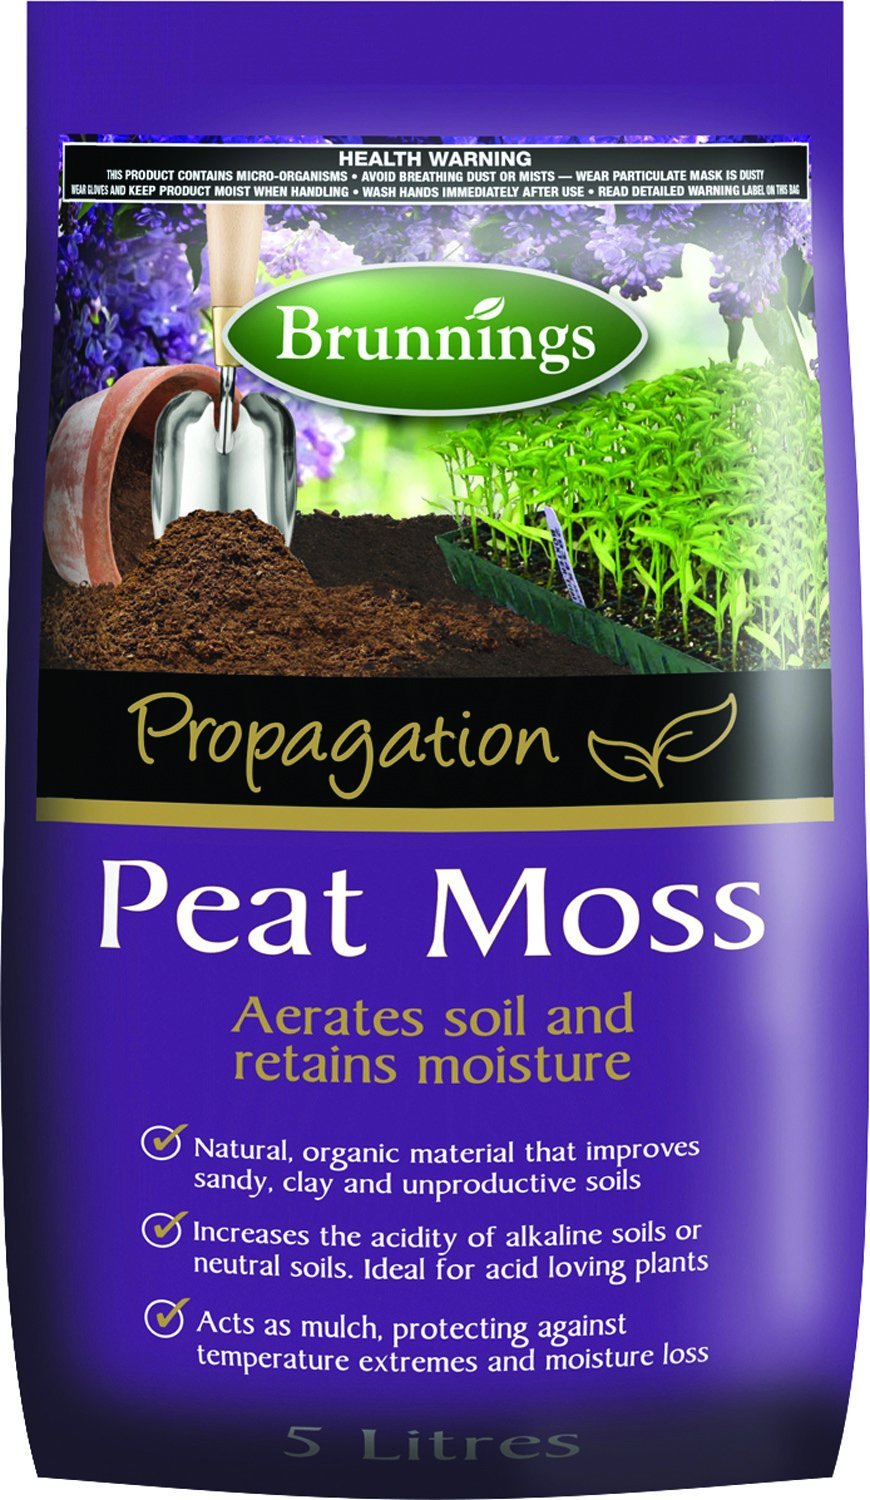 Brunnings 5L Peat Moss - Bunnings Australia